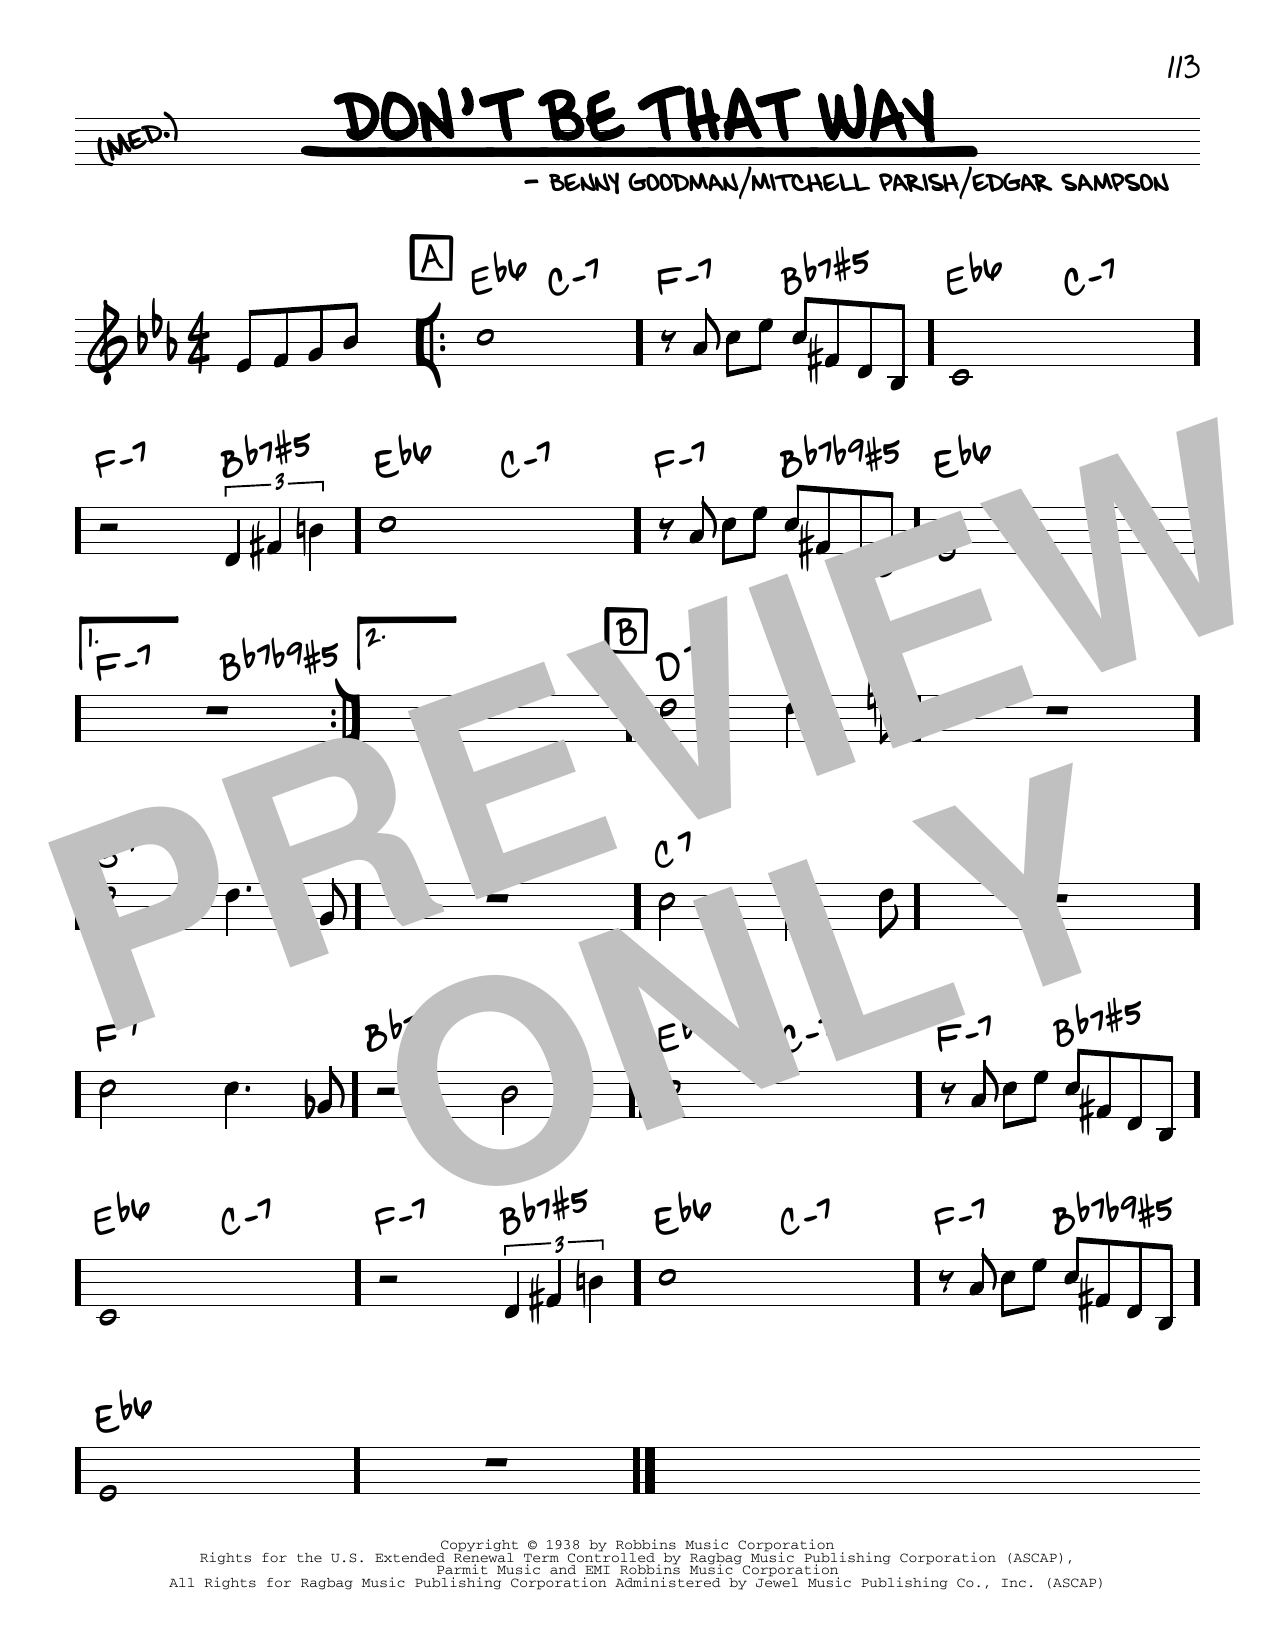 Benny Goodman Don't Be That Way sheet music notes and chords. Download Printable PDF.